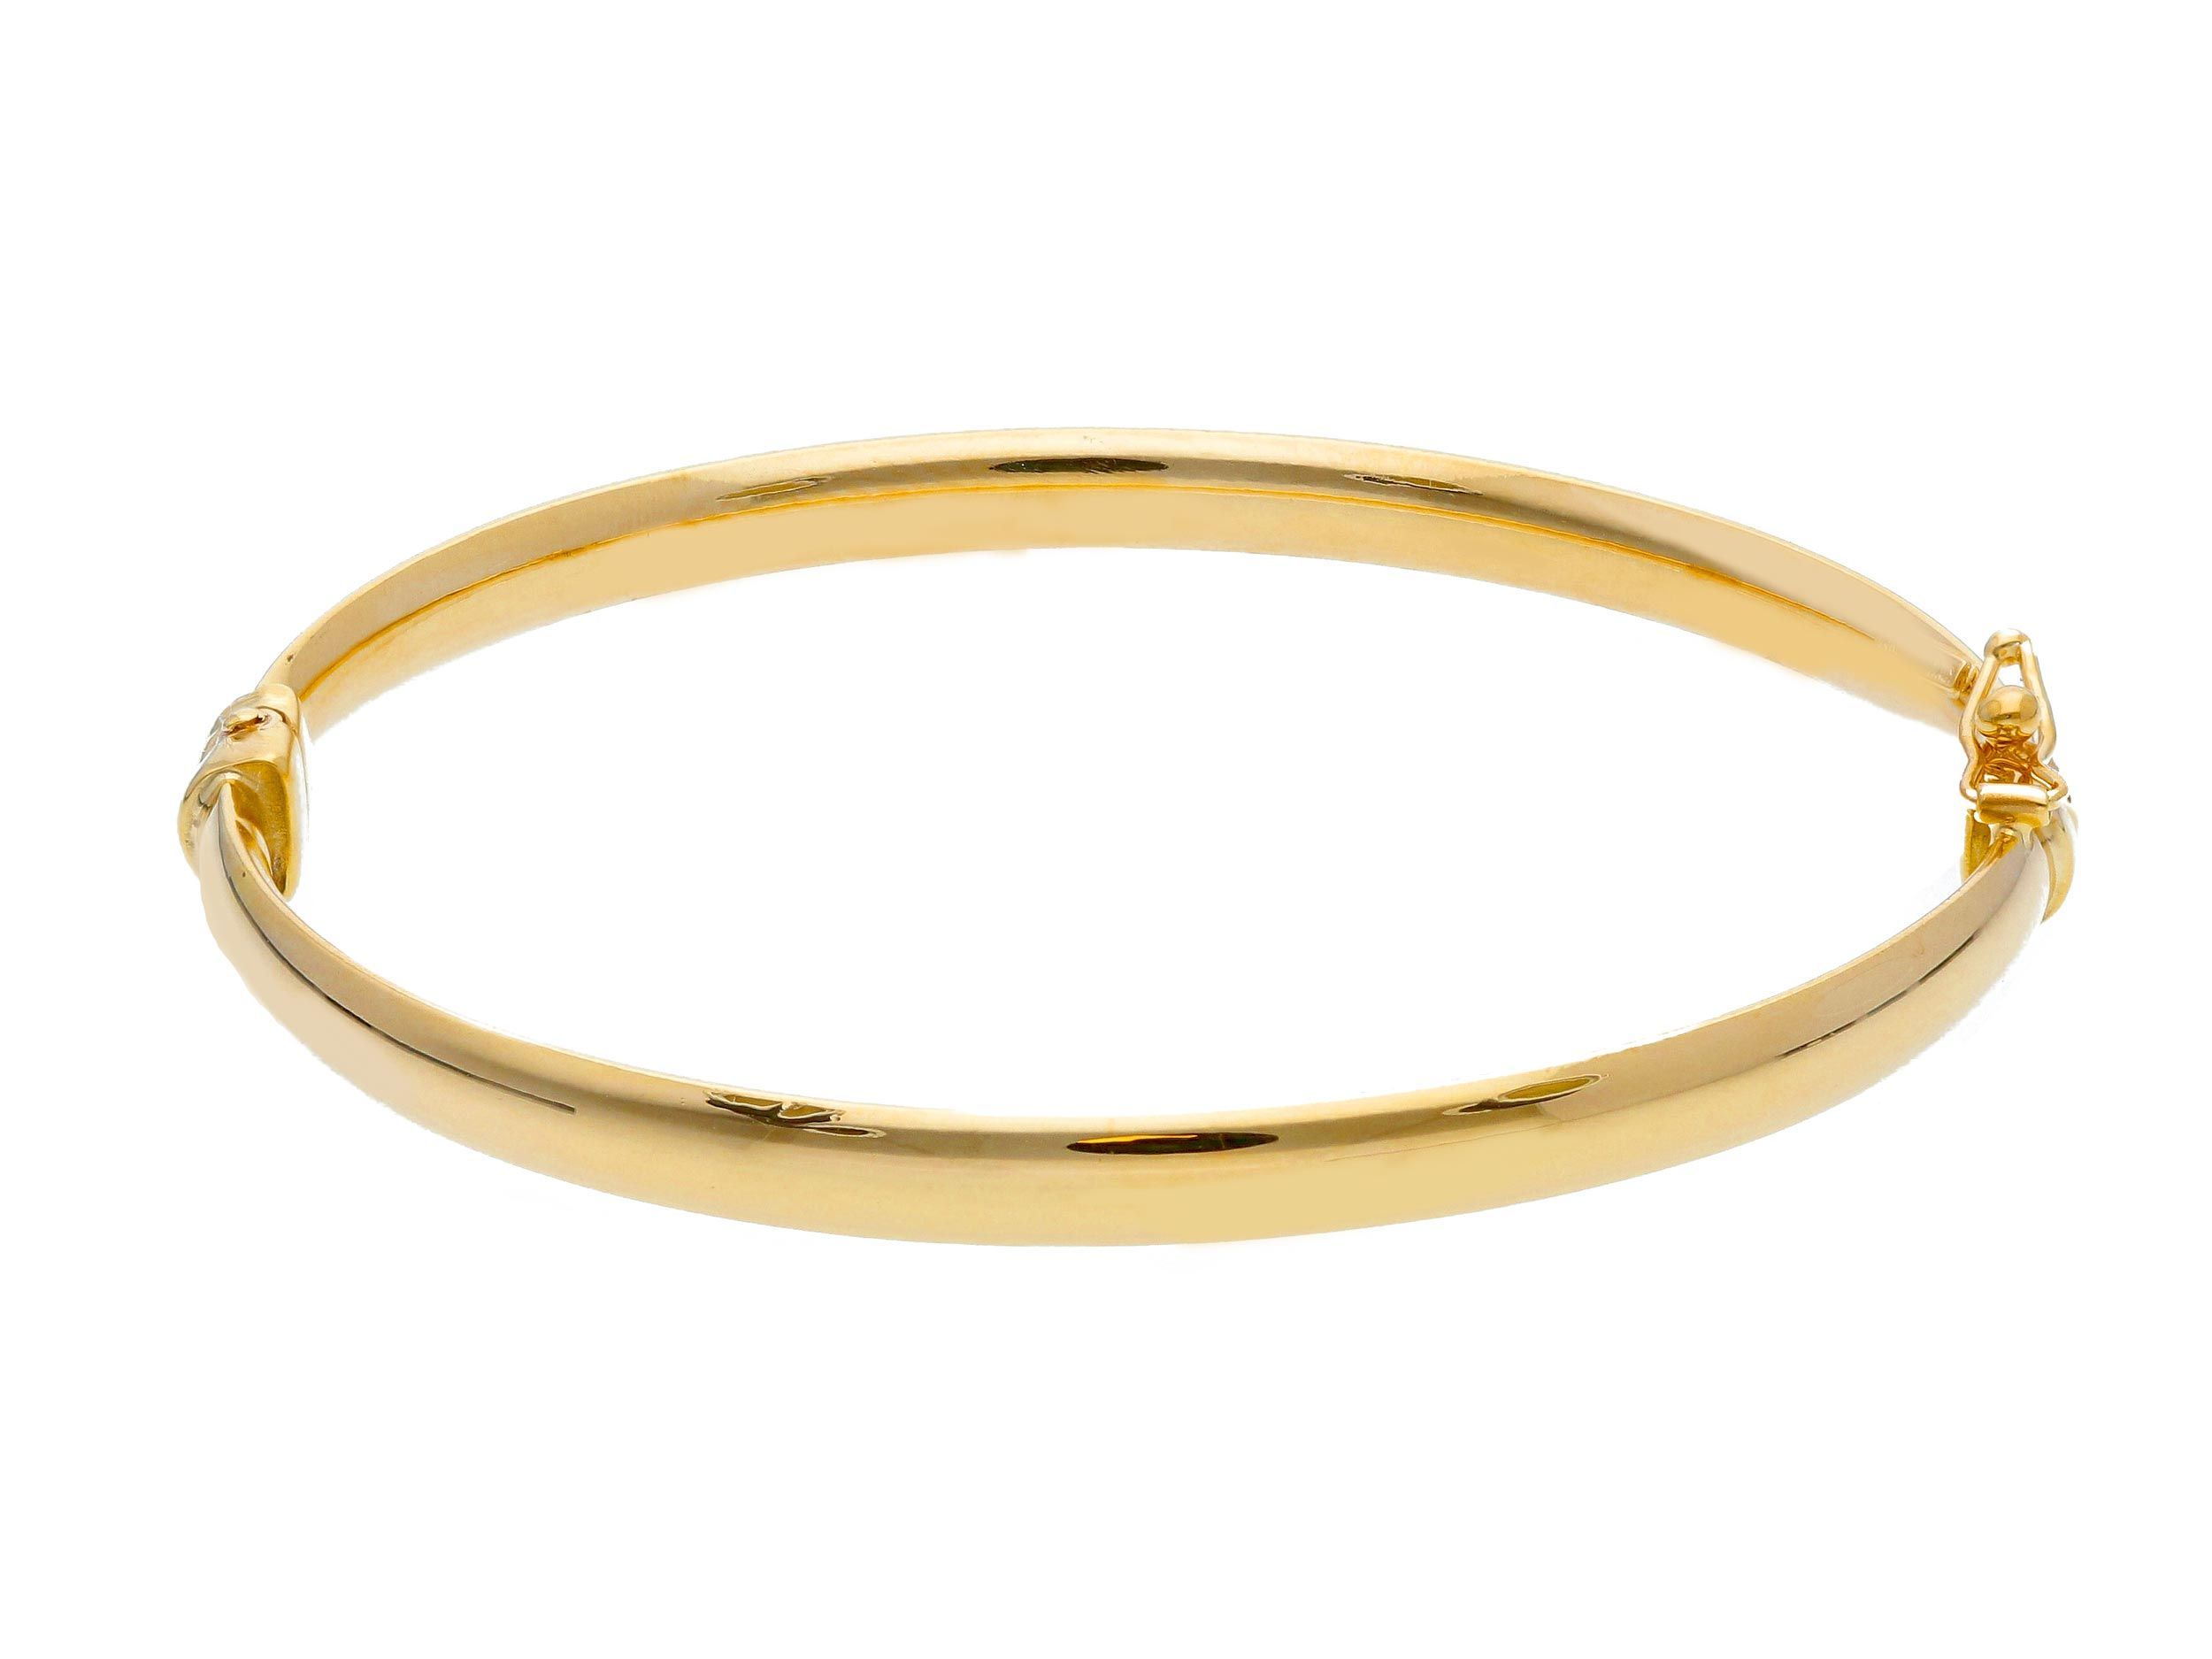 Golden bracelet with clasp k14  Ø 60mm  (code S230485)